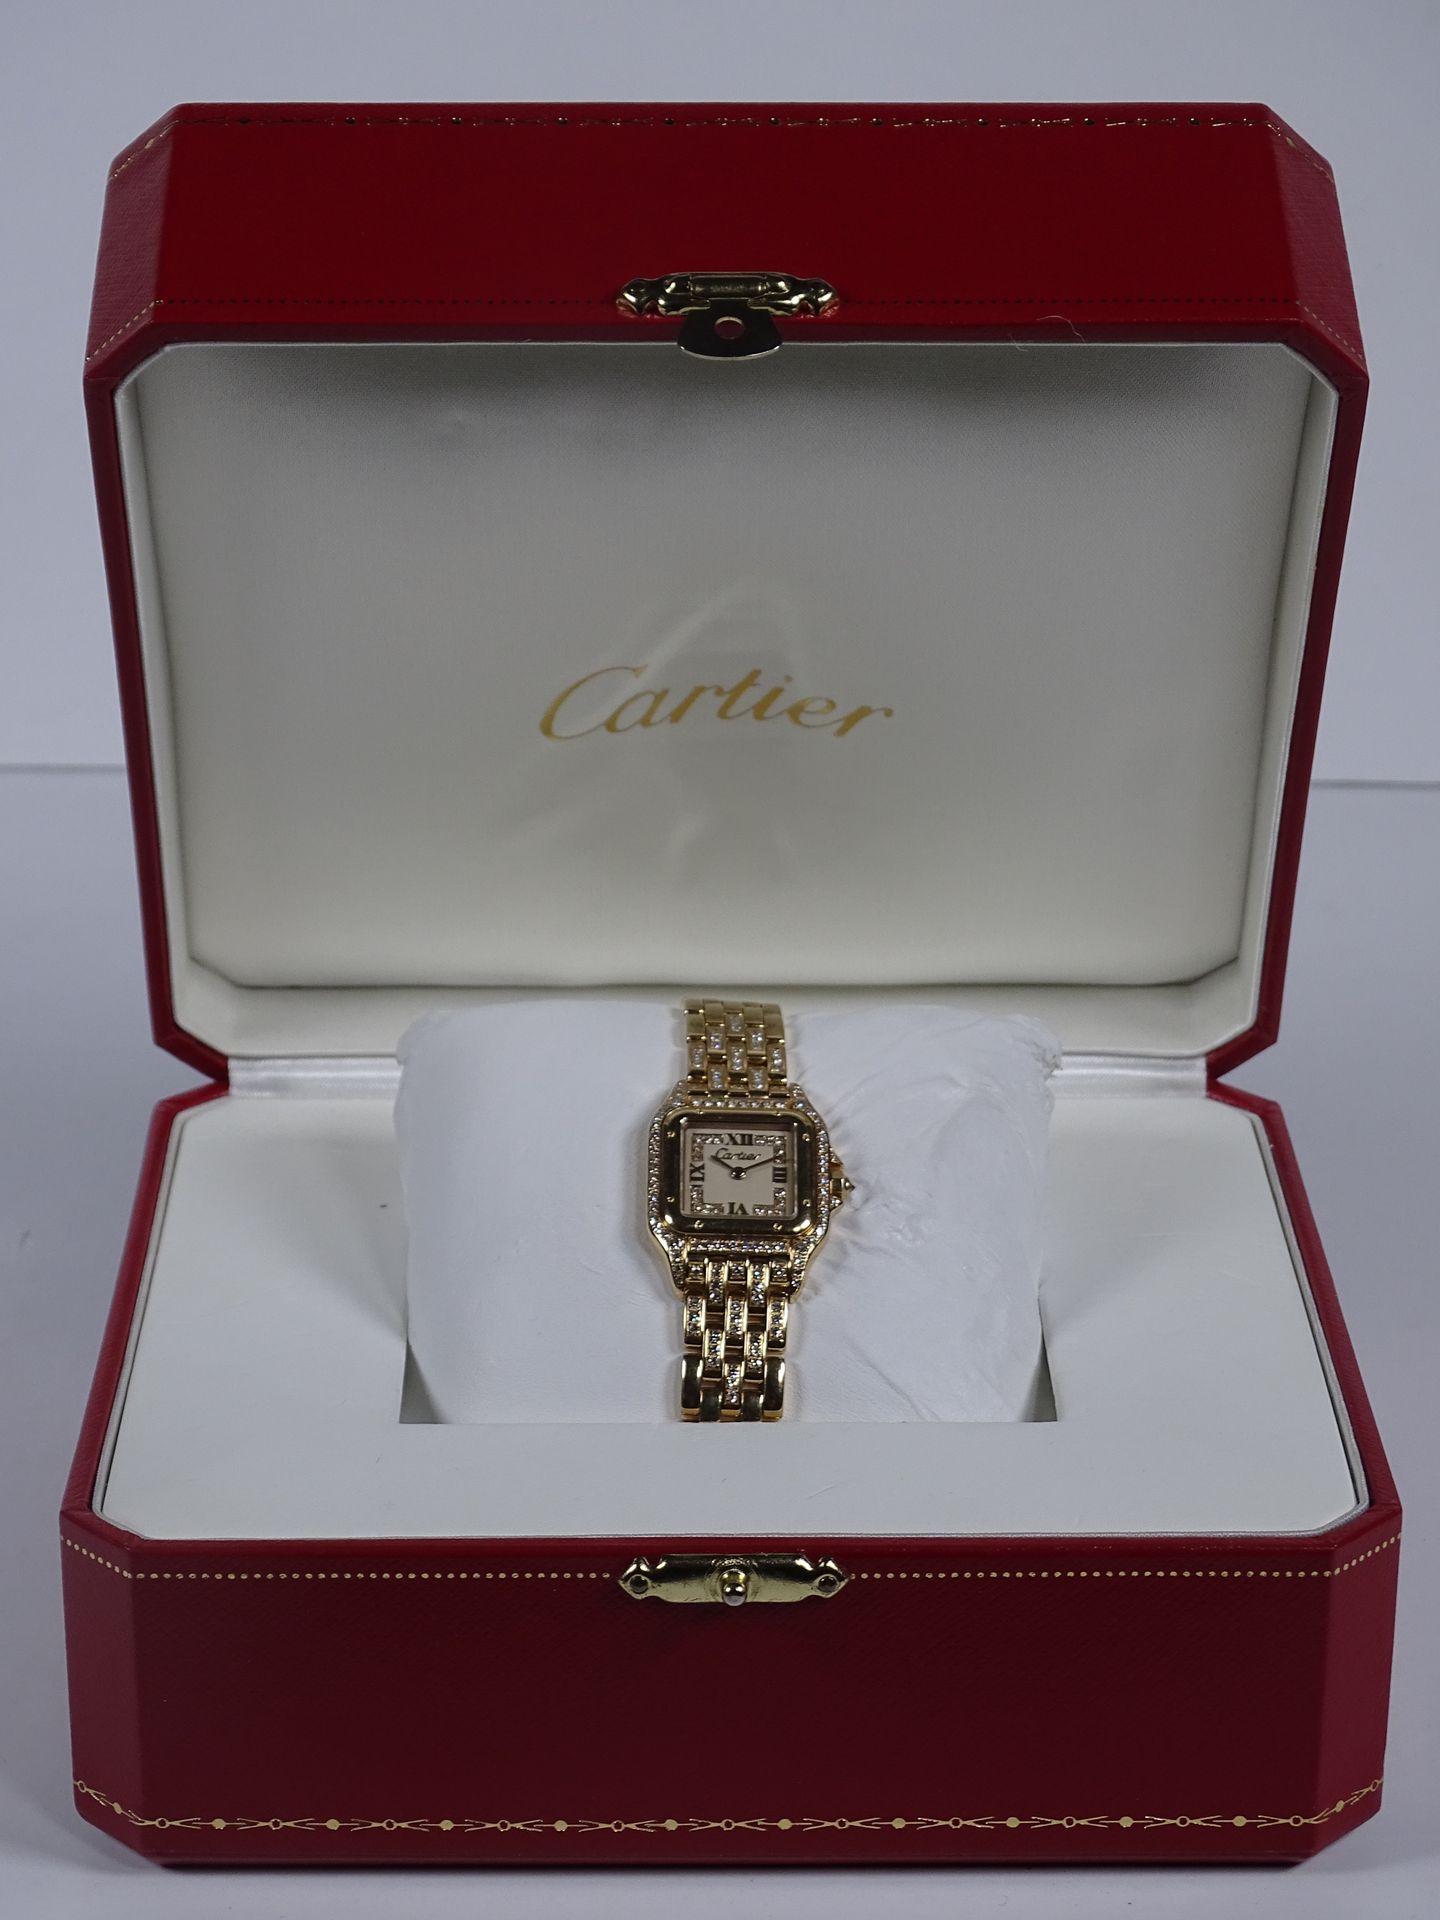 CARTIER 金色女士腕表。

来自卡地亚之家的Panthère模型。

表壳、表盘和手镯的一些环节都铺设了小钻石。

金色手镯，带折叠扣。

石英机芯。

&hellip;